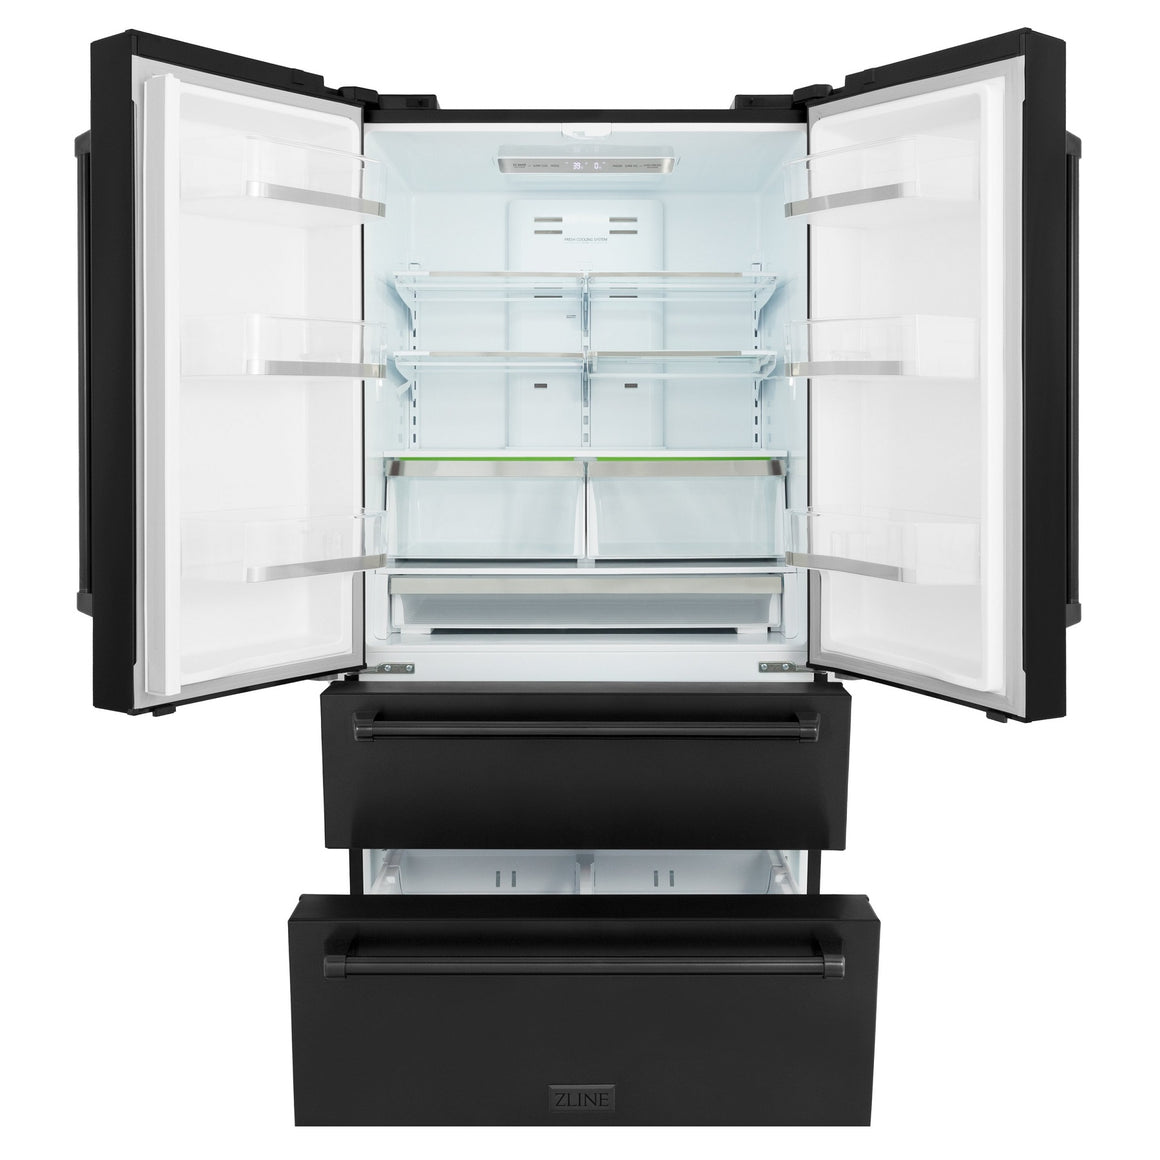 ZLINE 36 in. 22.5 cu. ft Built-in French Door Refrigerator with Ice Maker in Fingerprint Resistant Black Stainless Steel